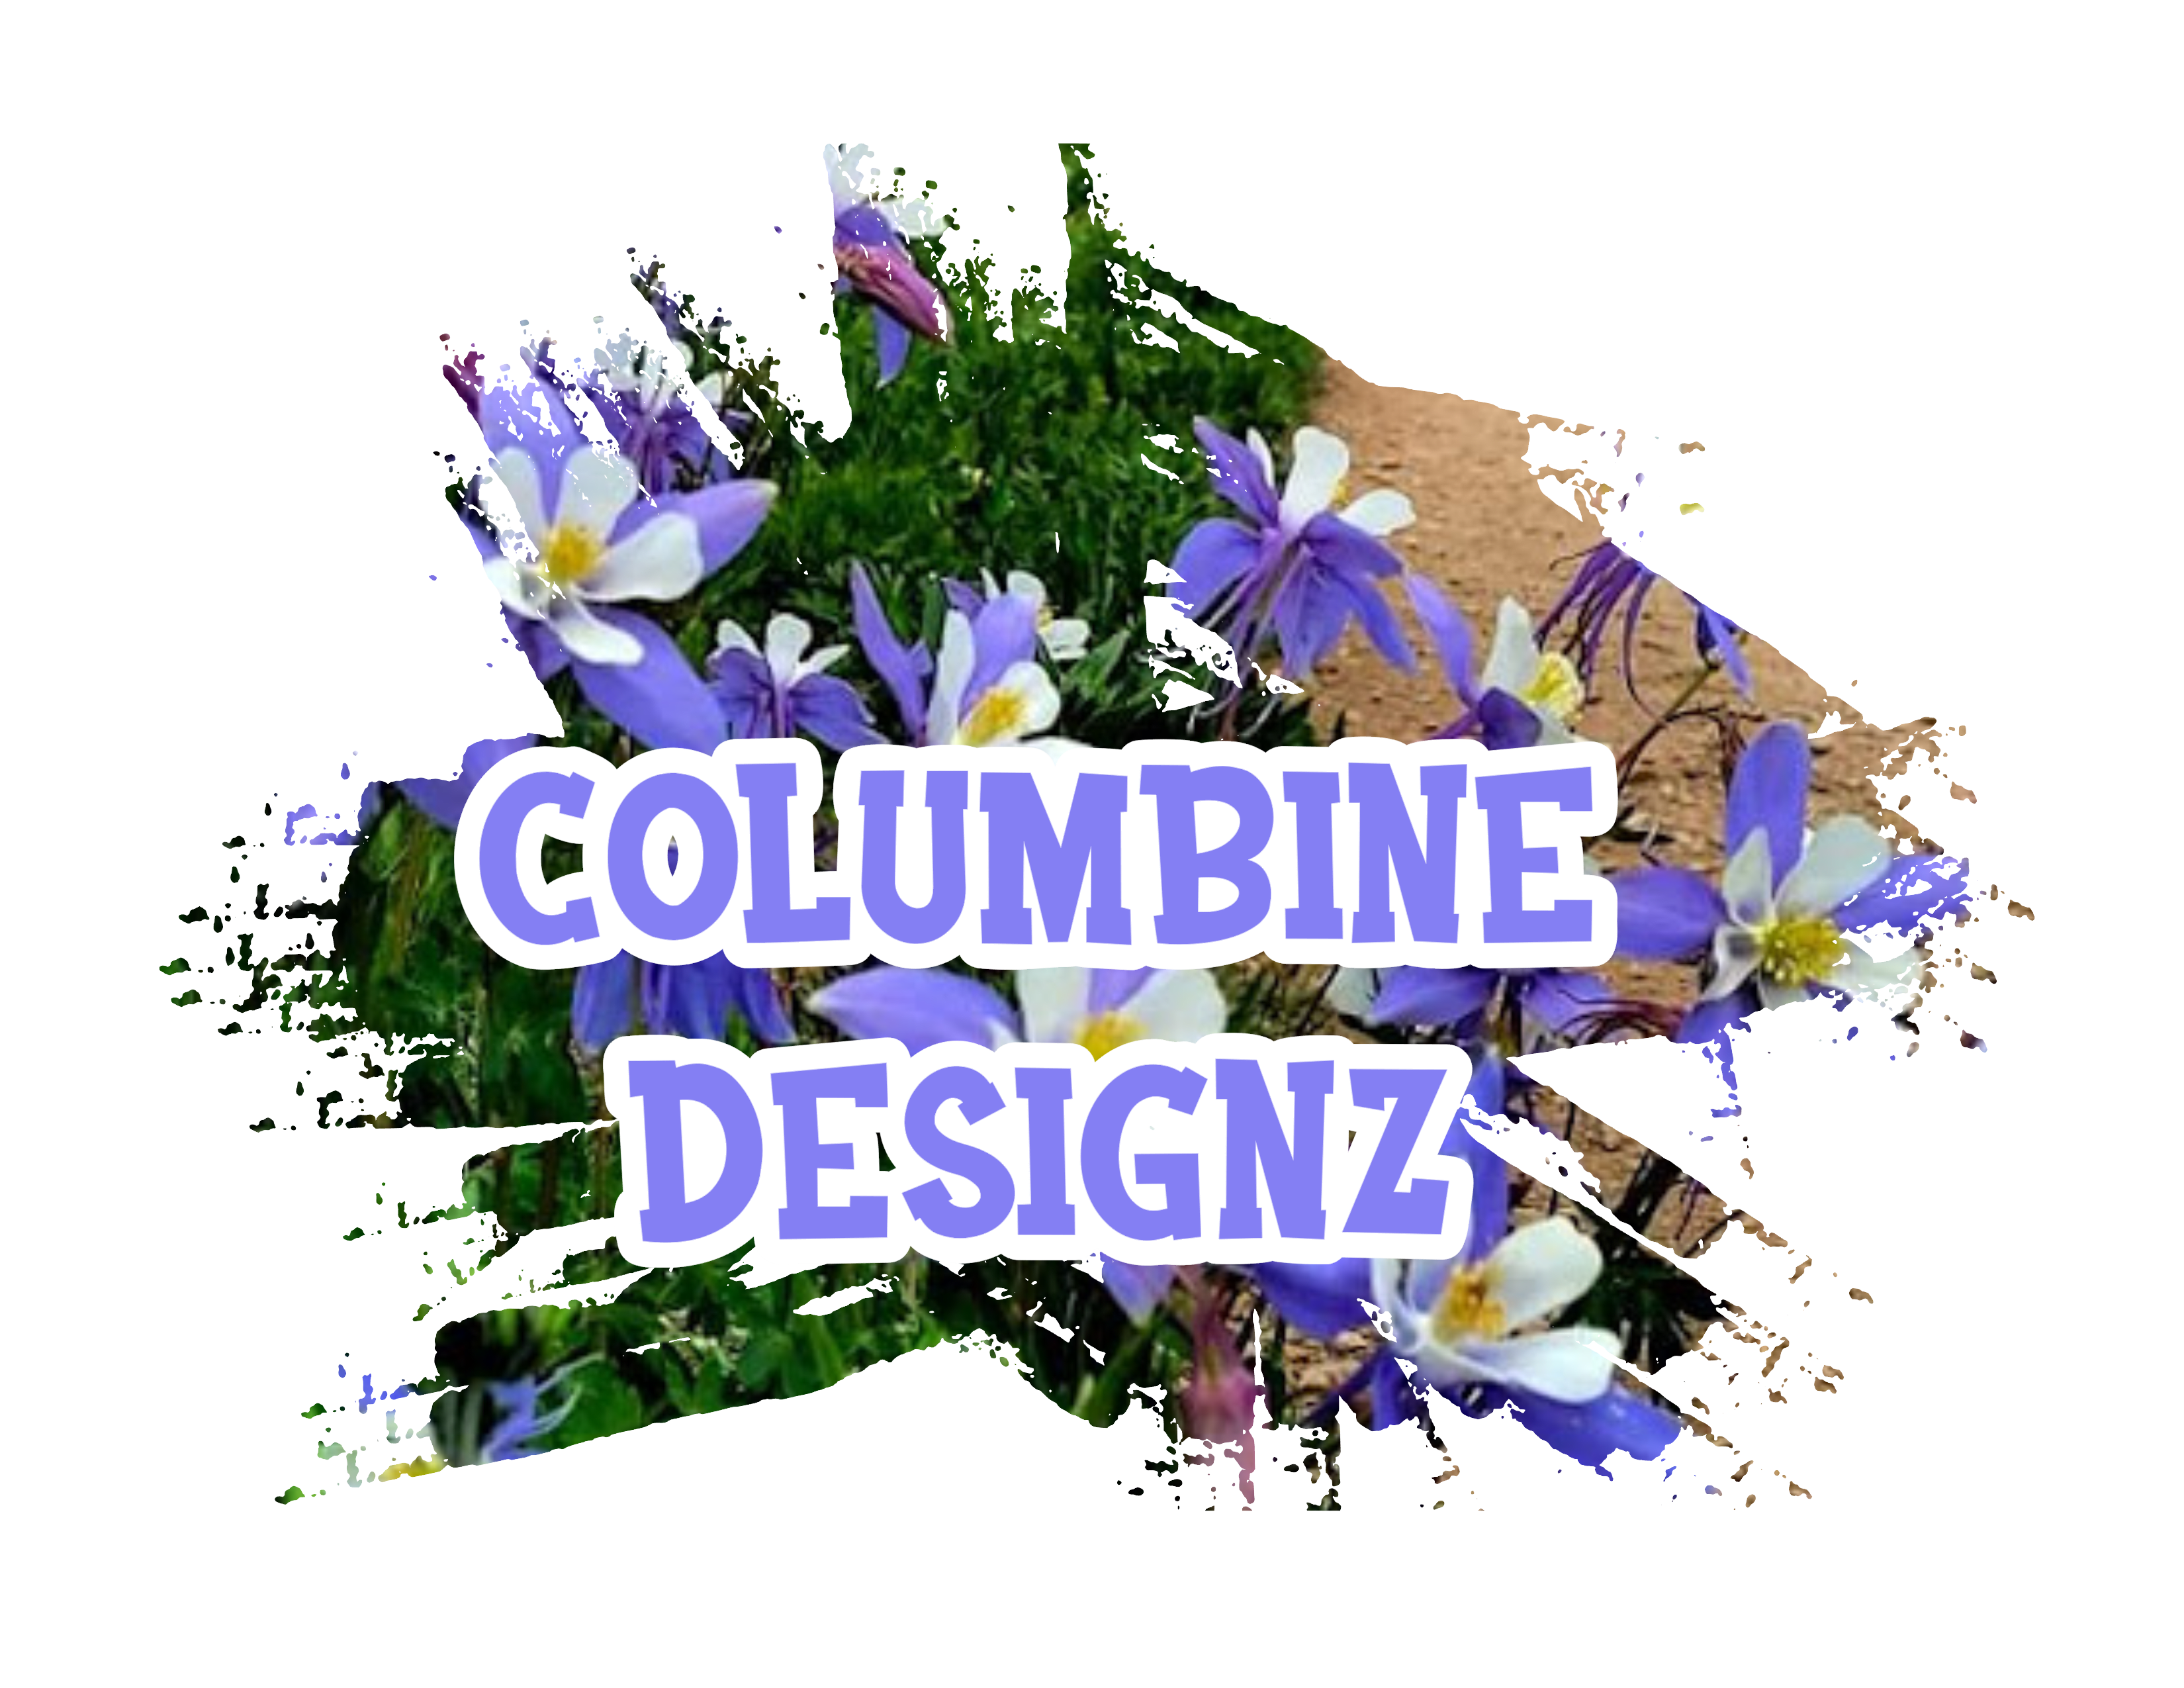 Columbine Designz